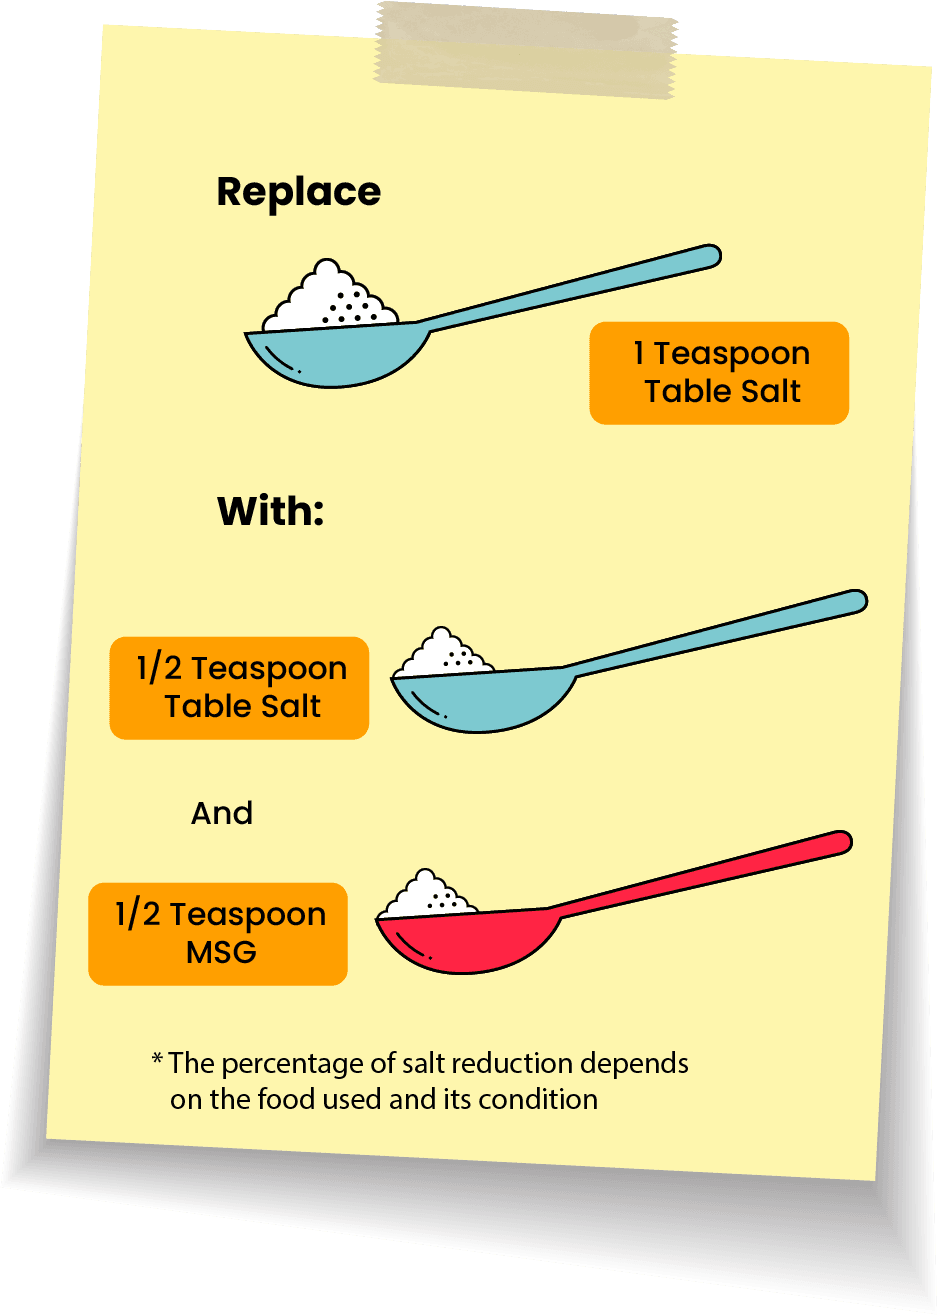 Replace 1 teaspoon of table salt with half teaspoon of table salt and half teaspoon of MSG